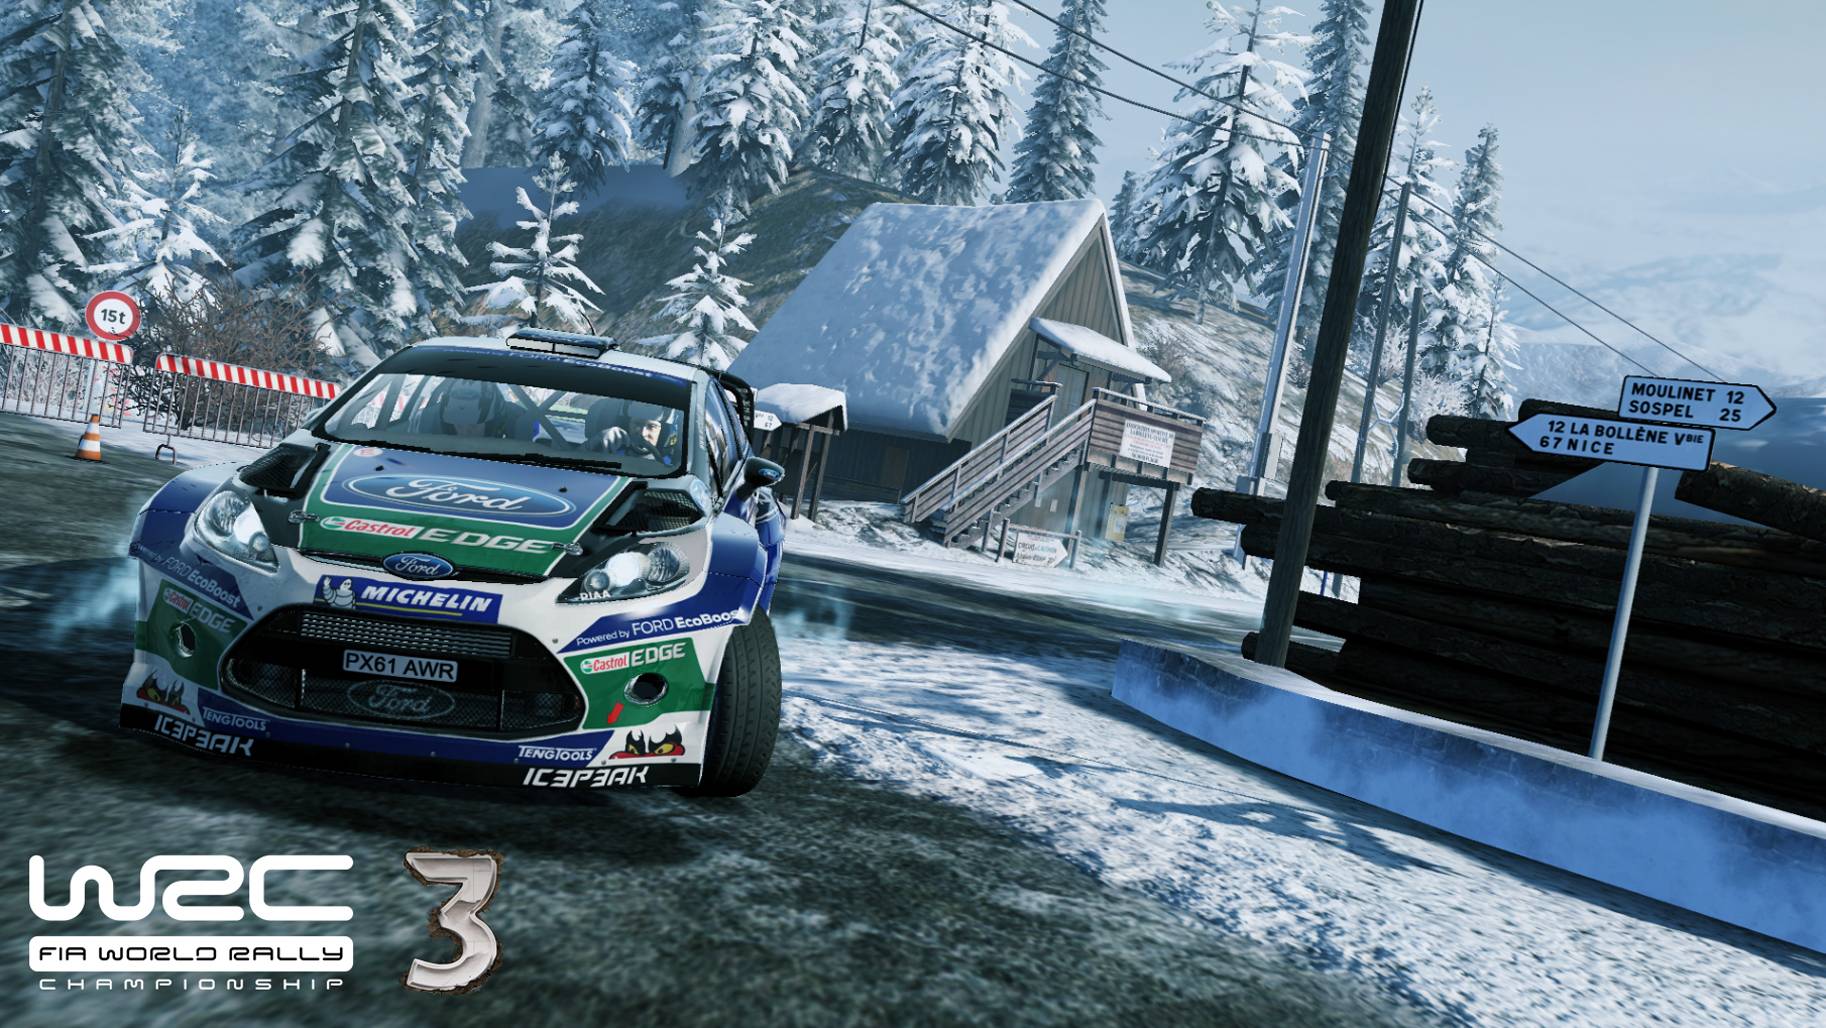 WRC 3 Wallpaper In HD « GamingBolt.com: Video Game News, Reviews